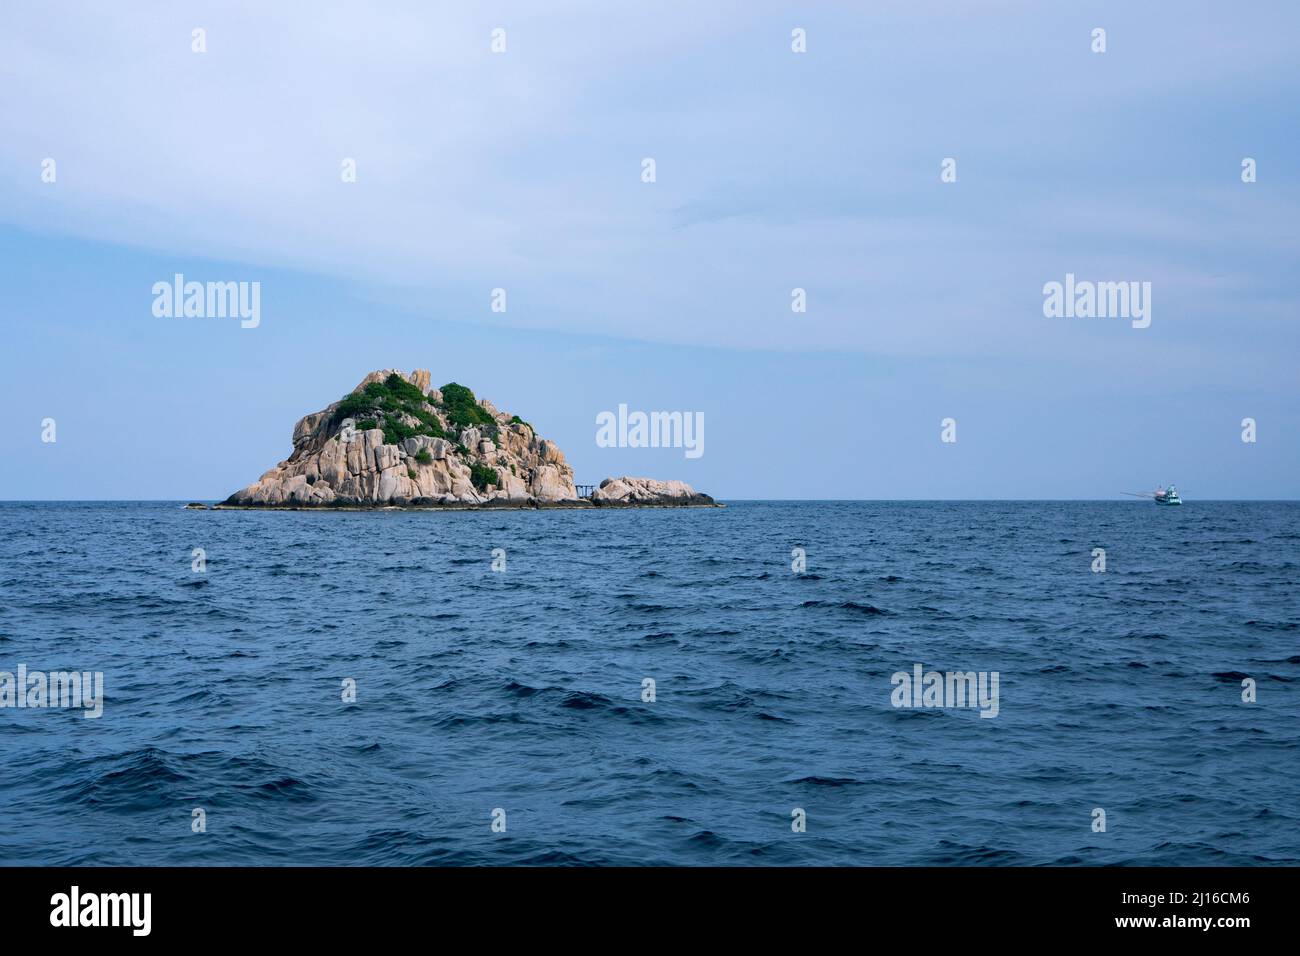 rock island and deep blue sea at thailand gulf Stock Photo